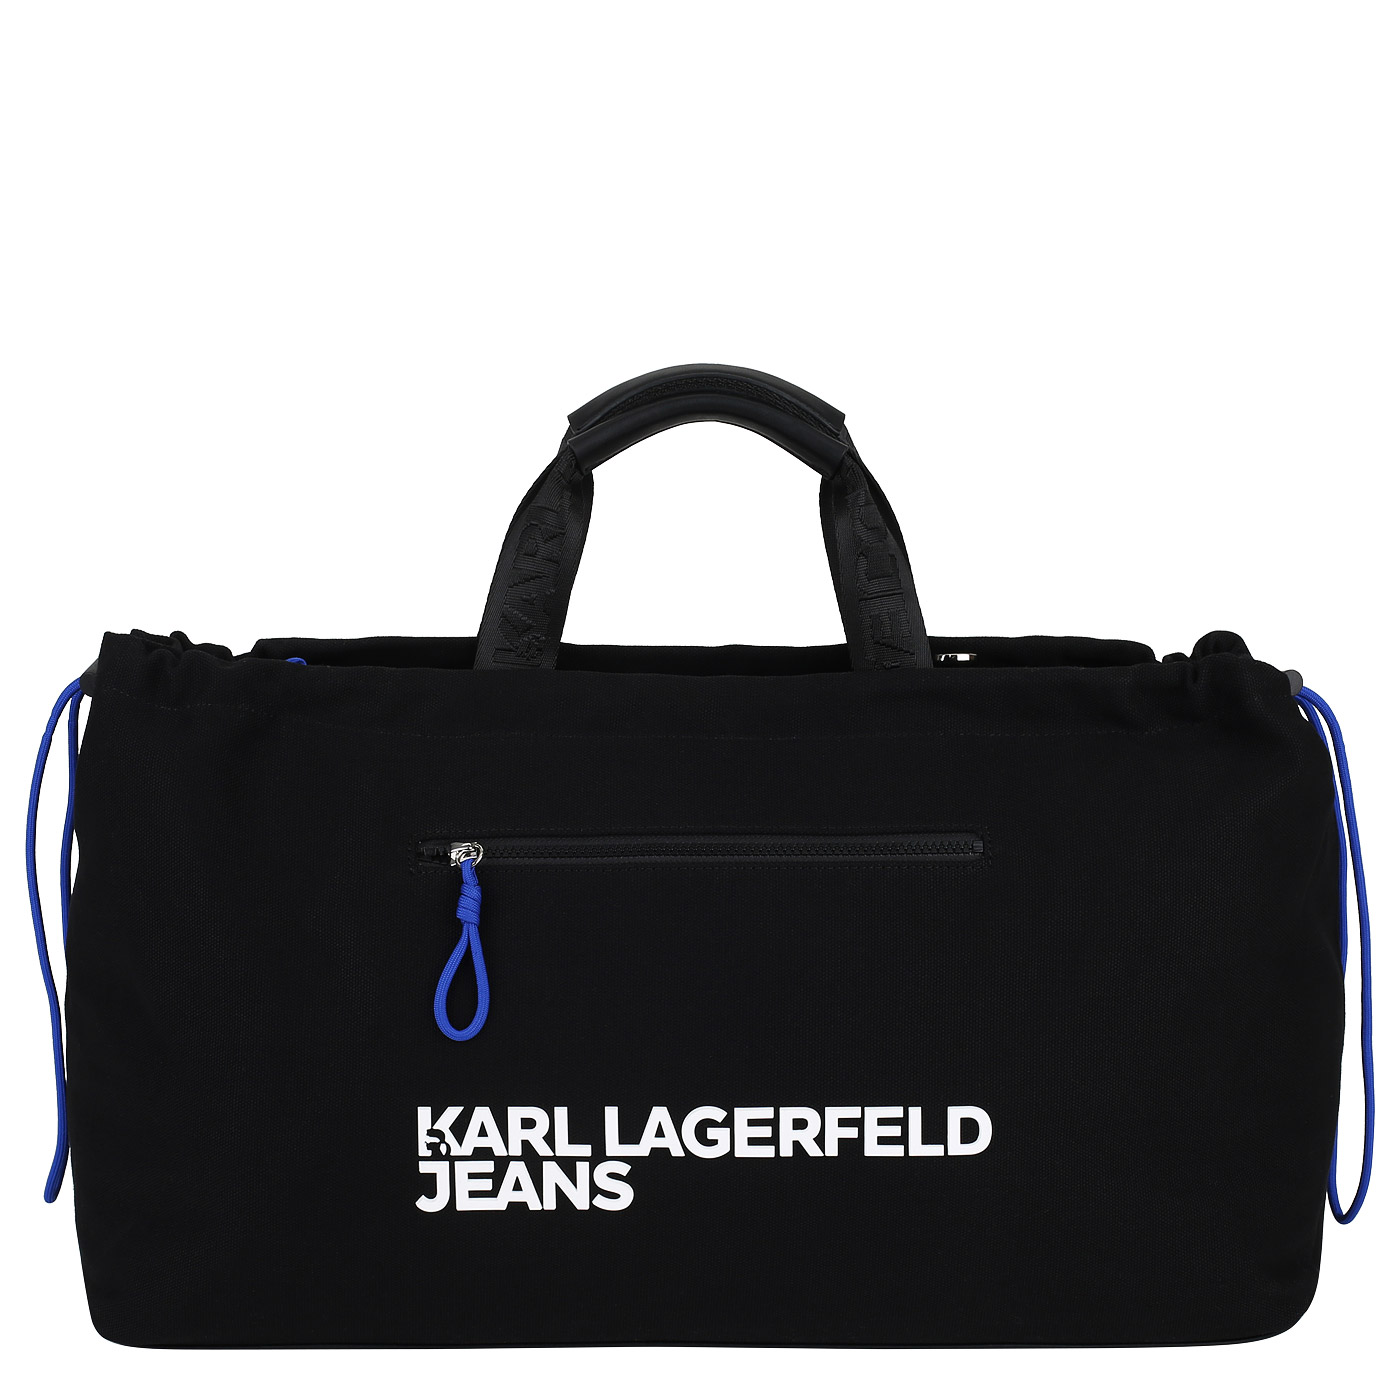 Karl Lagerfeld Jeans Дорожная сумка